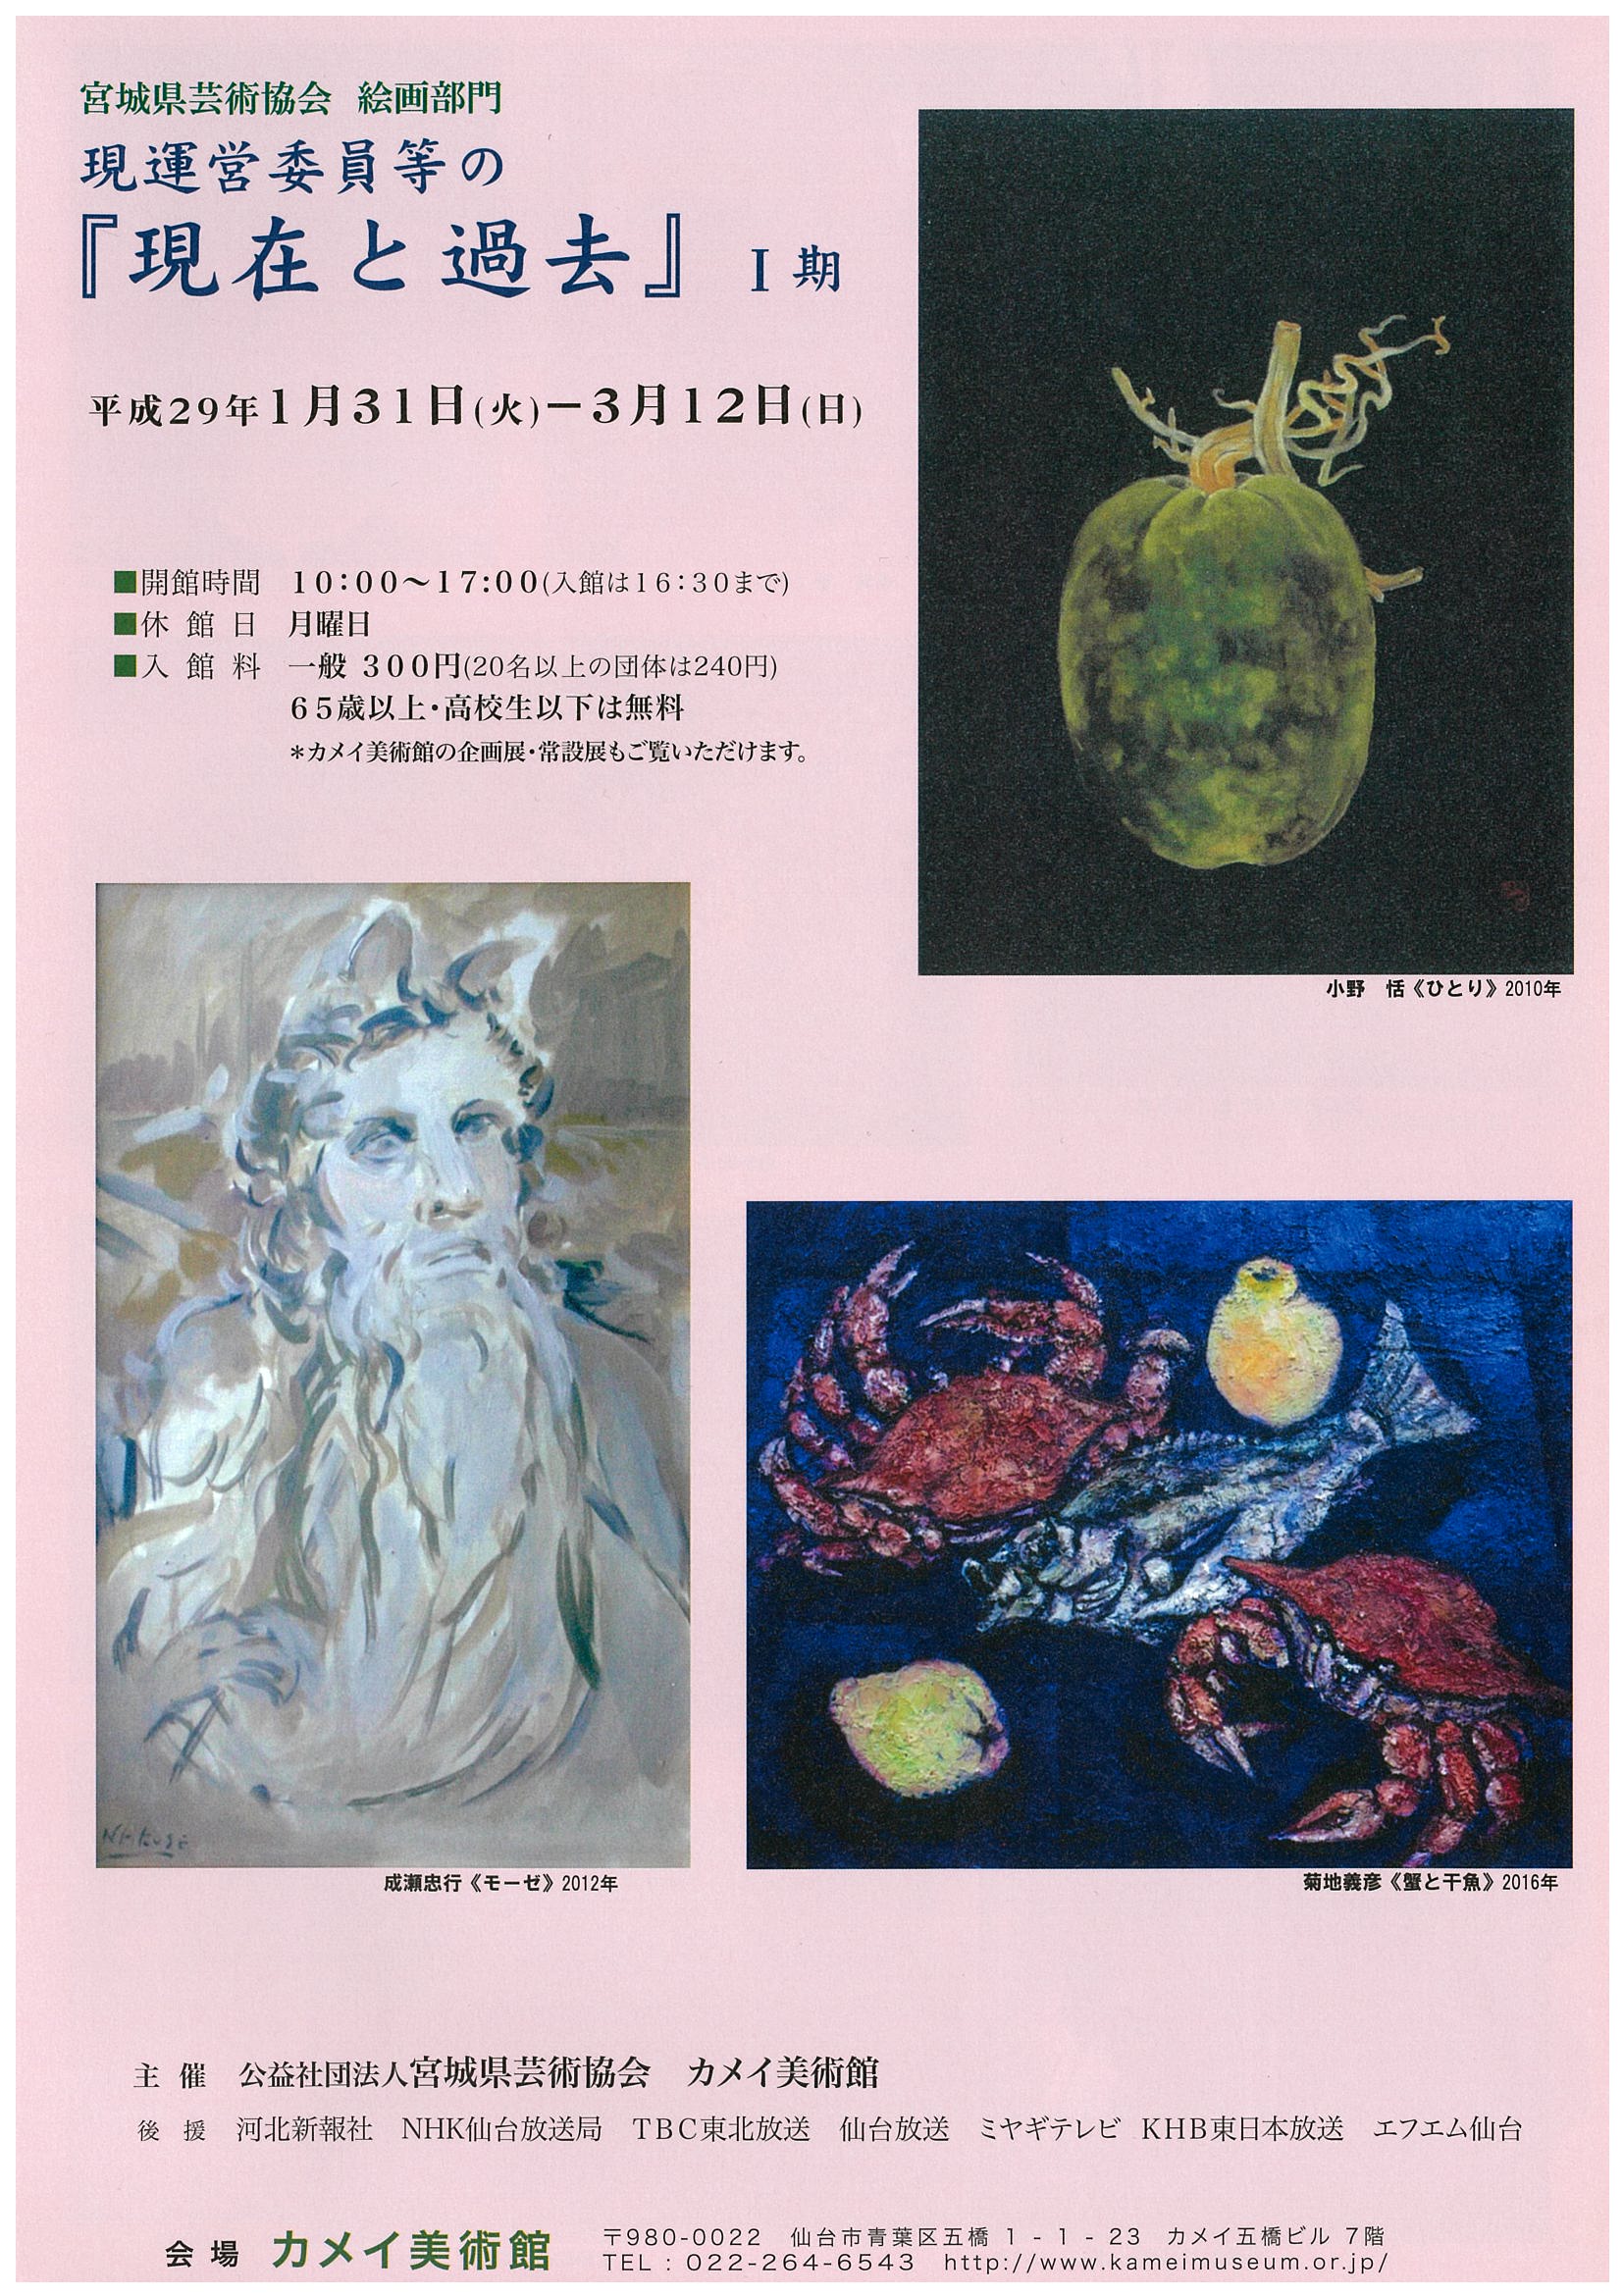 http://www.kameimuseum.or.jp/topics/2017/01/30/20170130140632-0001.jpg